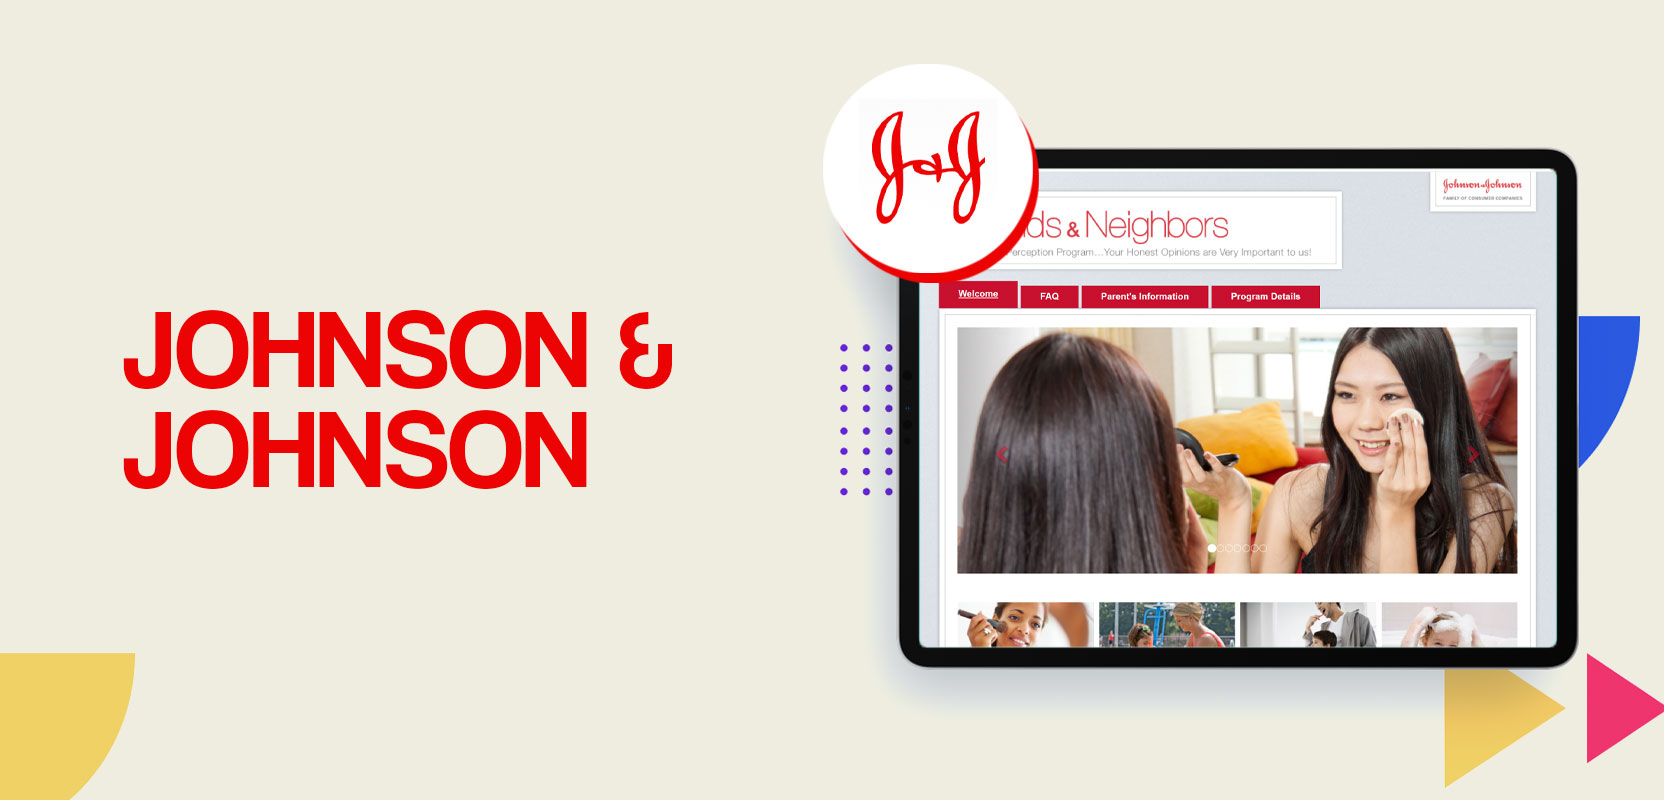 Screen showing Johnson & Johnson website